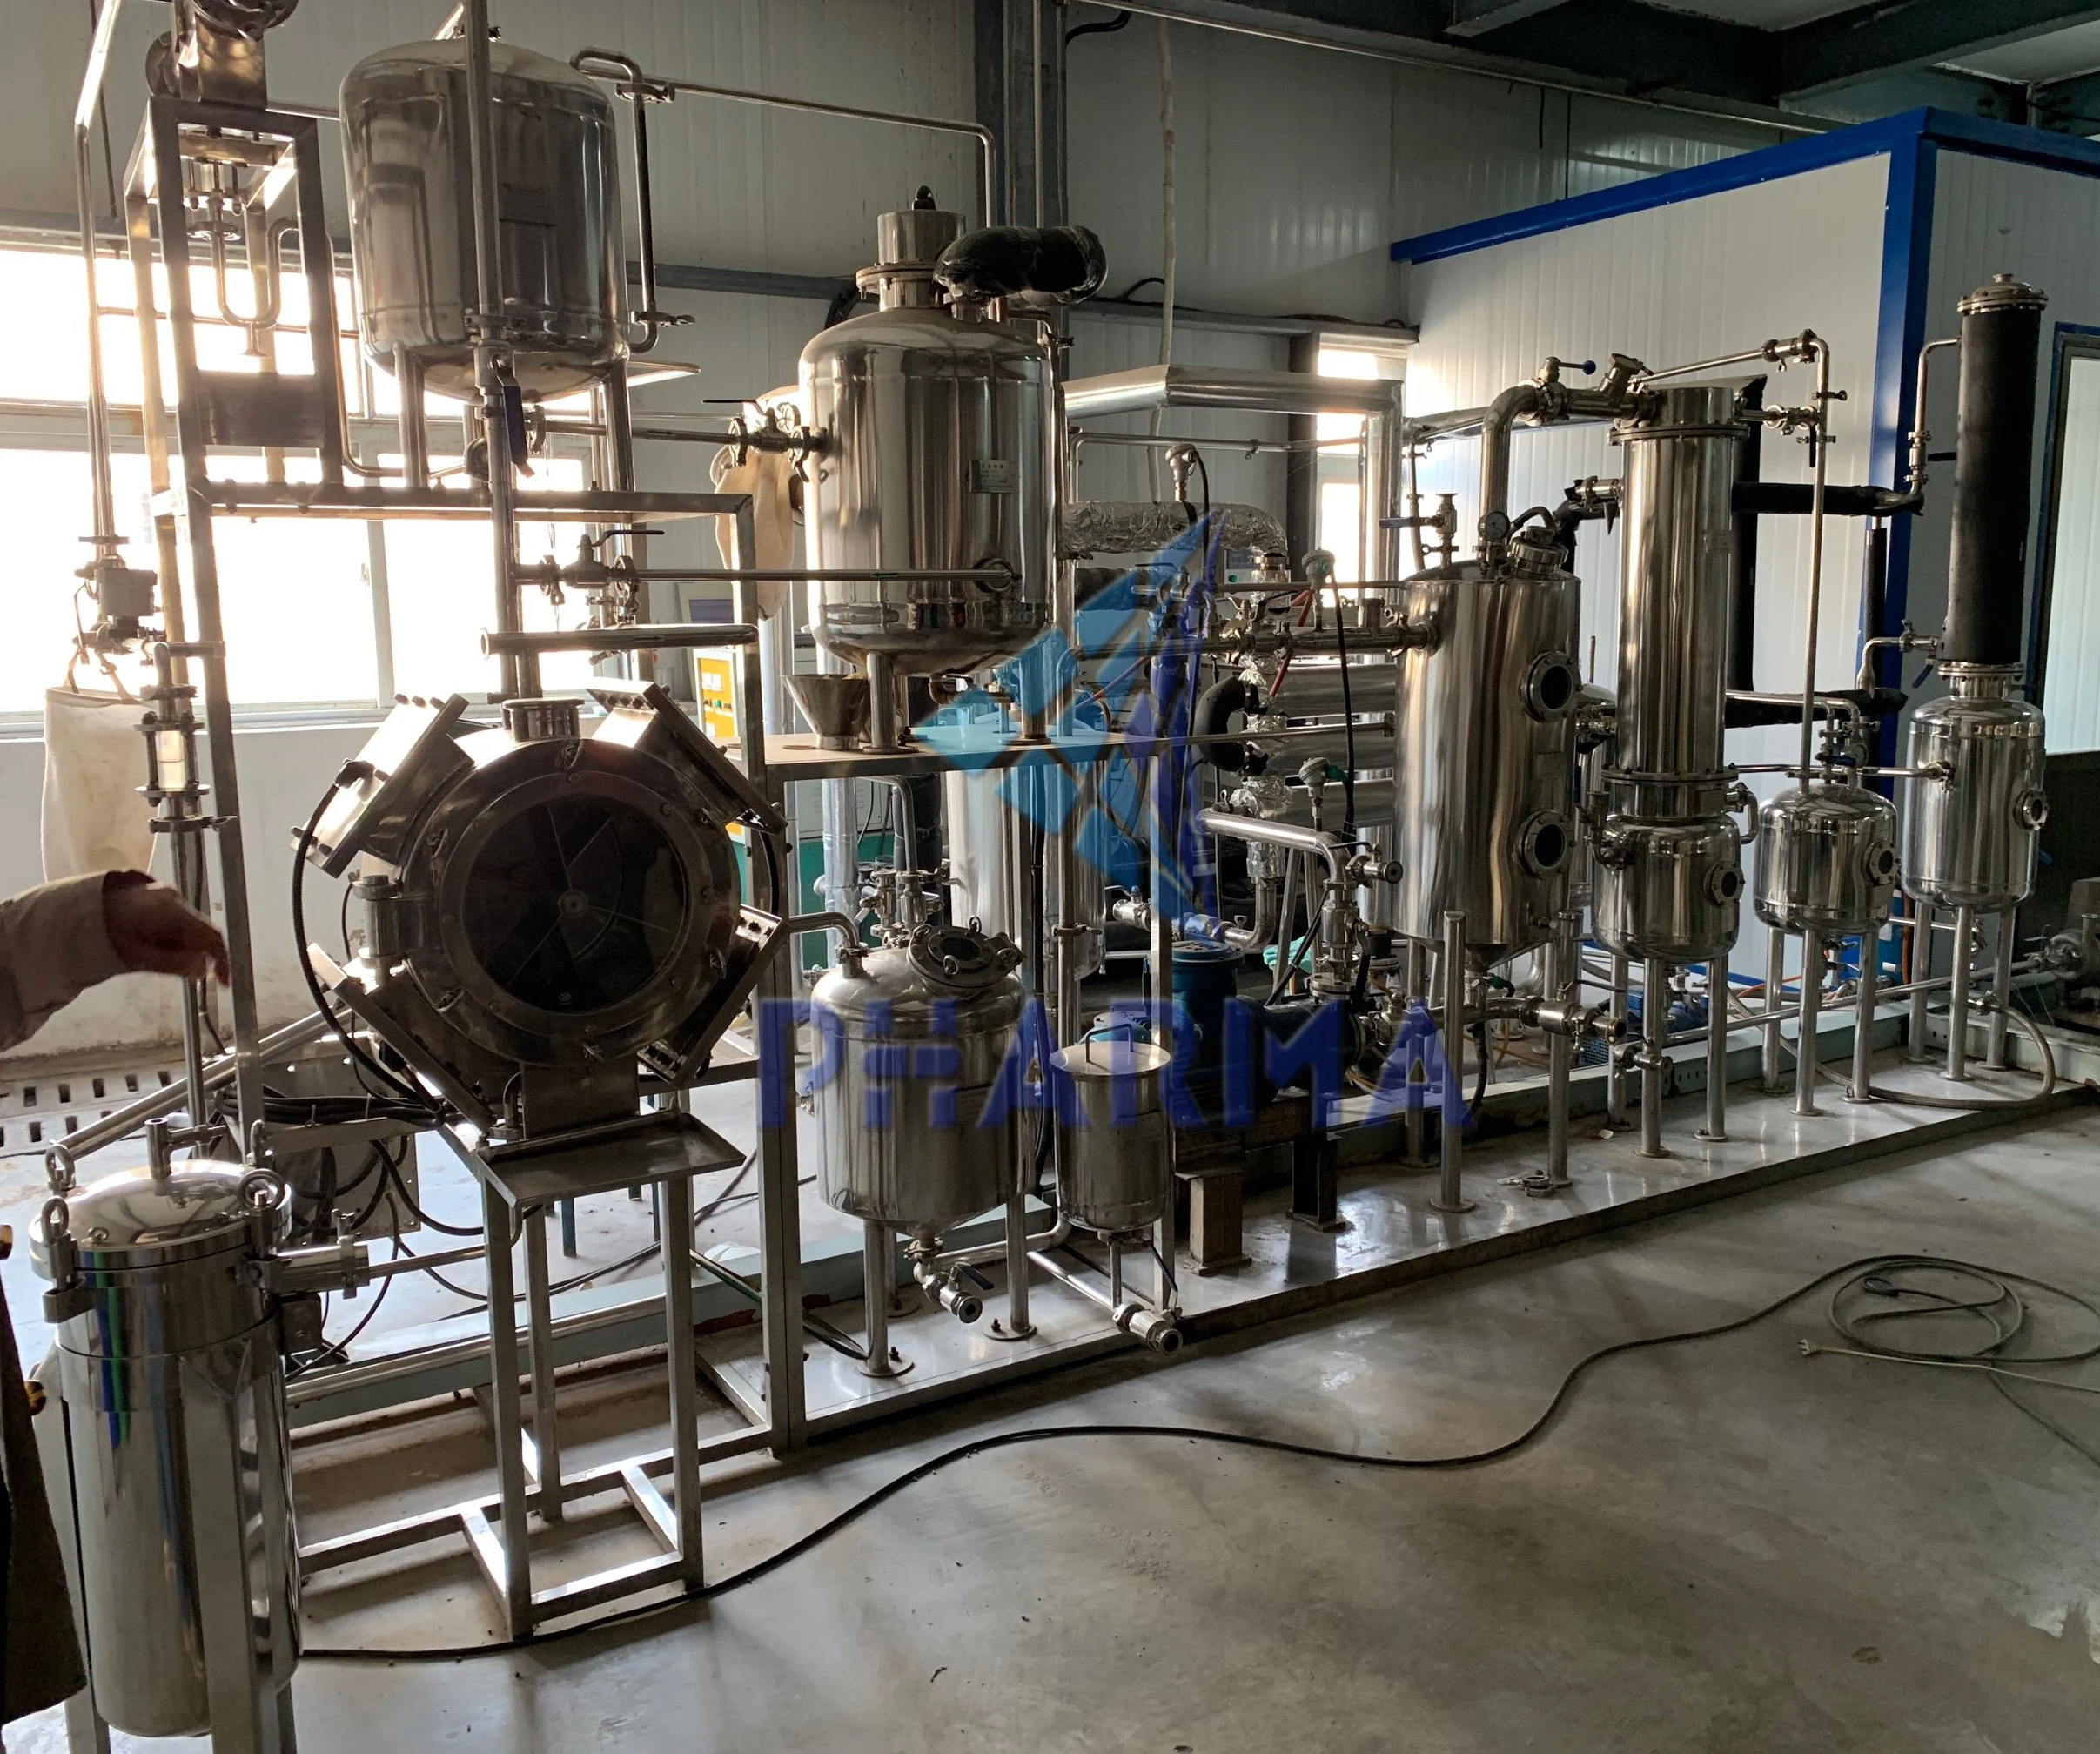 50L ethanol extraction machine for CBD